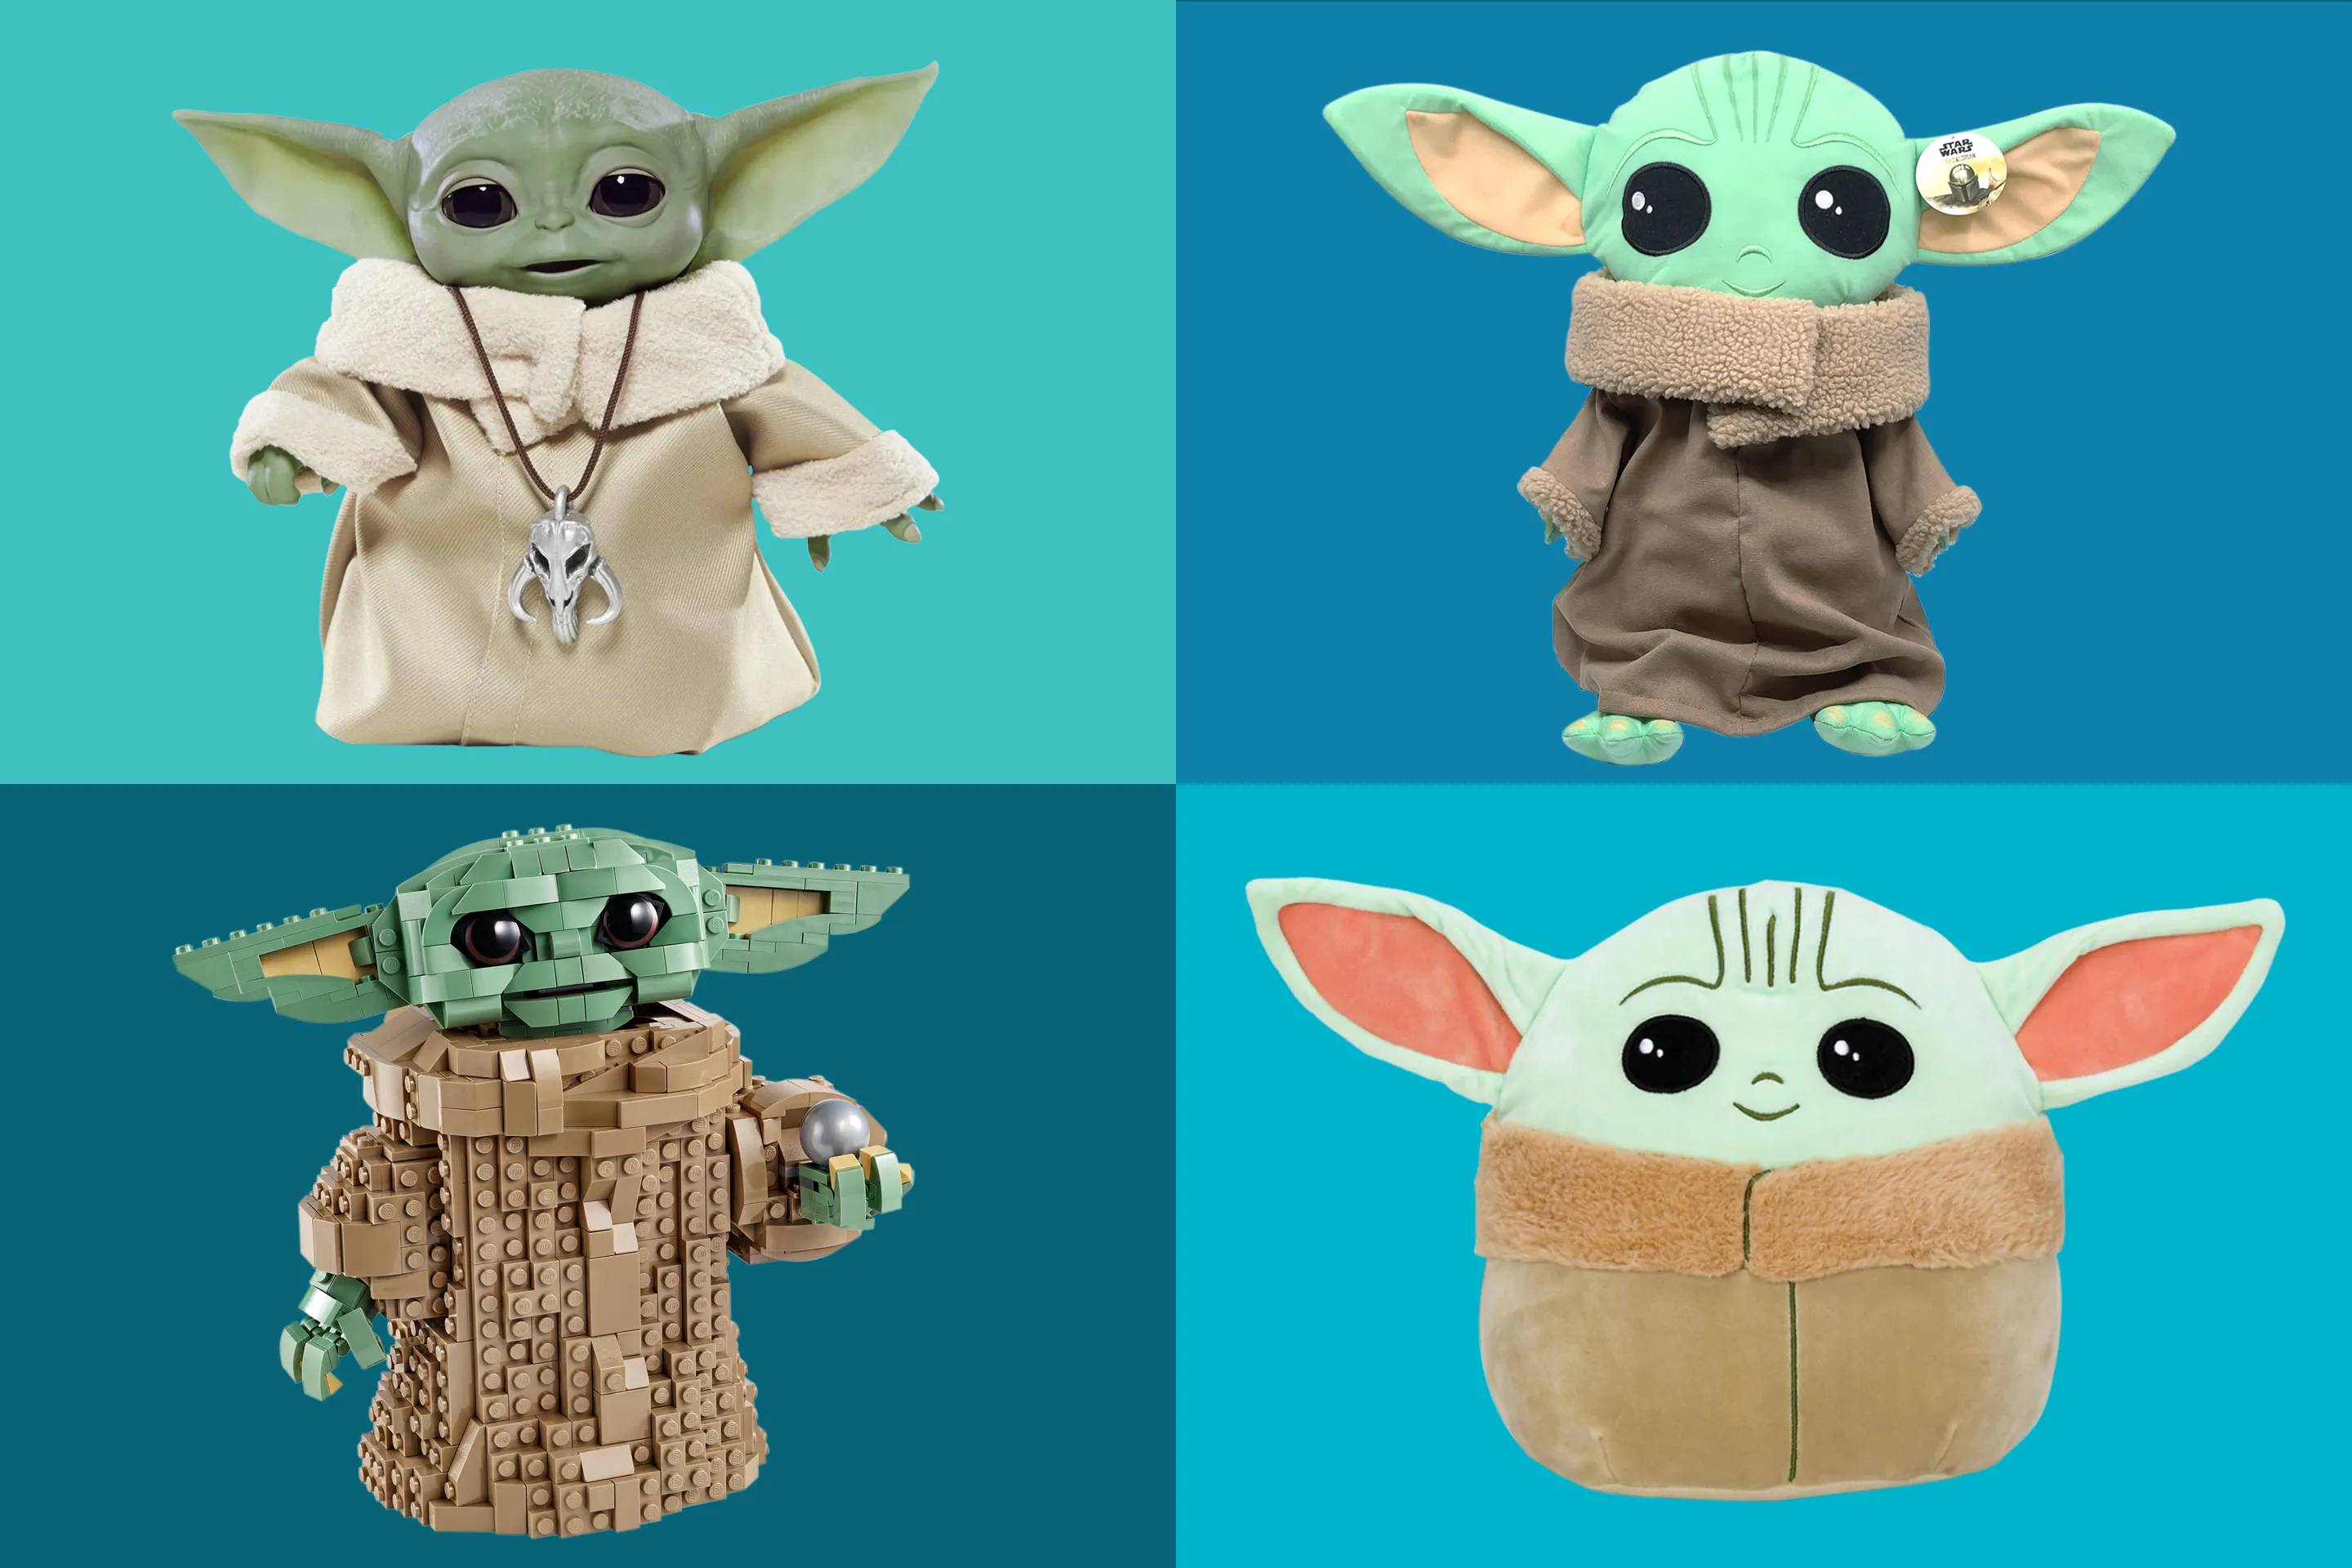 Baby Yoda Toys Where To Get Baby Yoda Dolls Legos In Stock Money